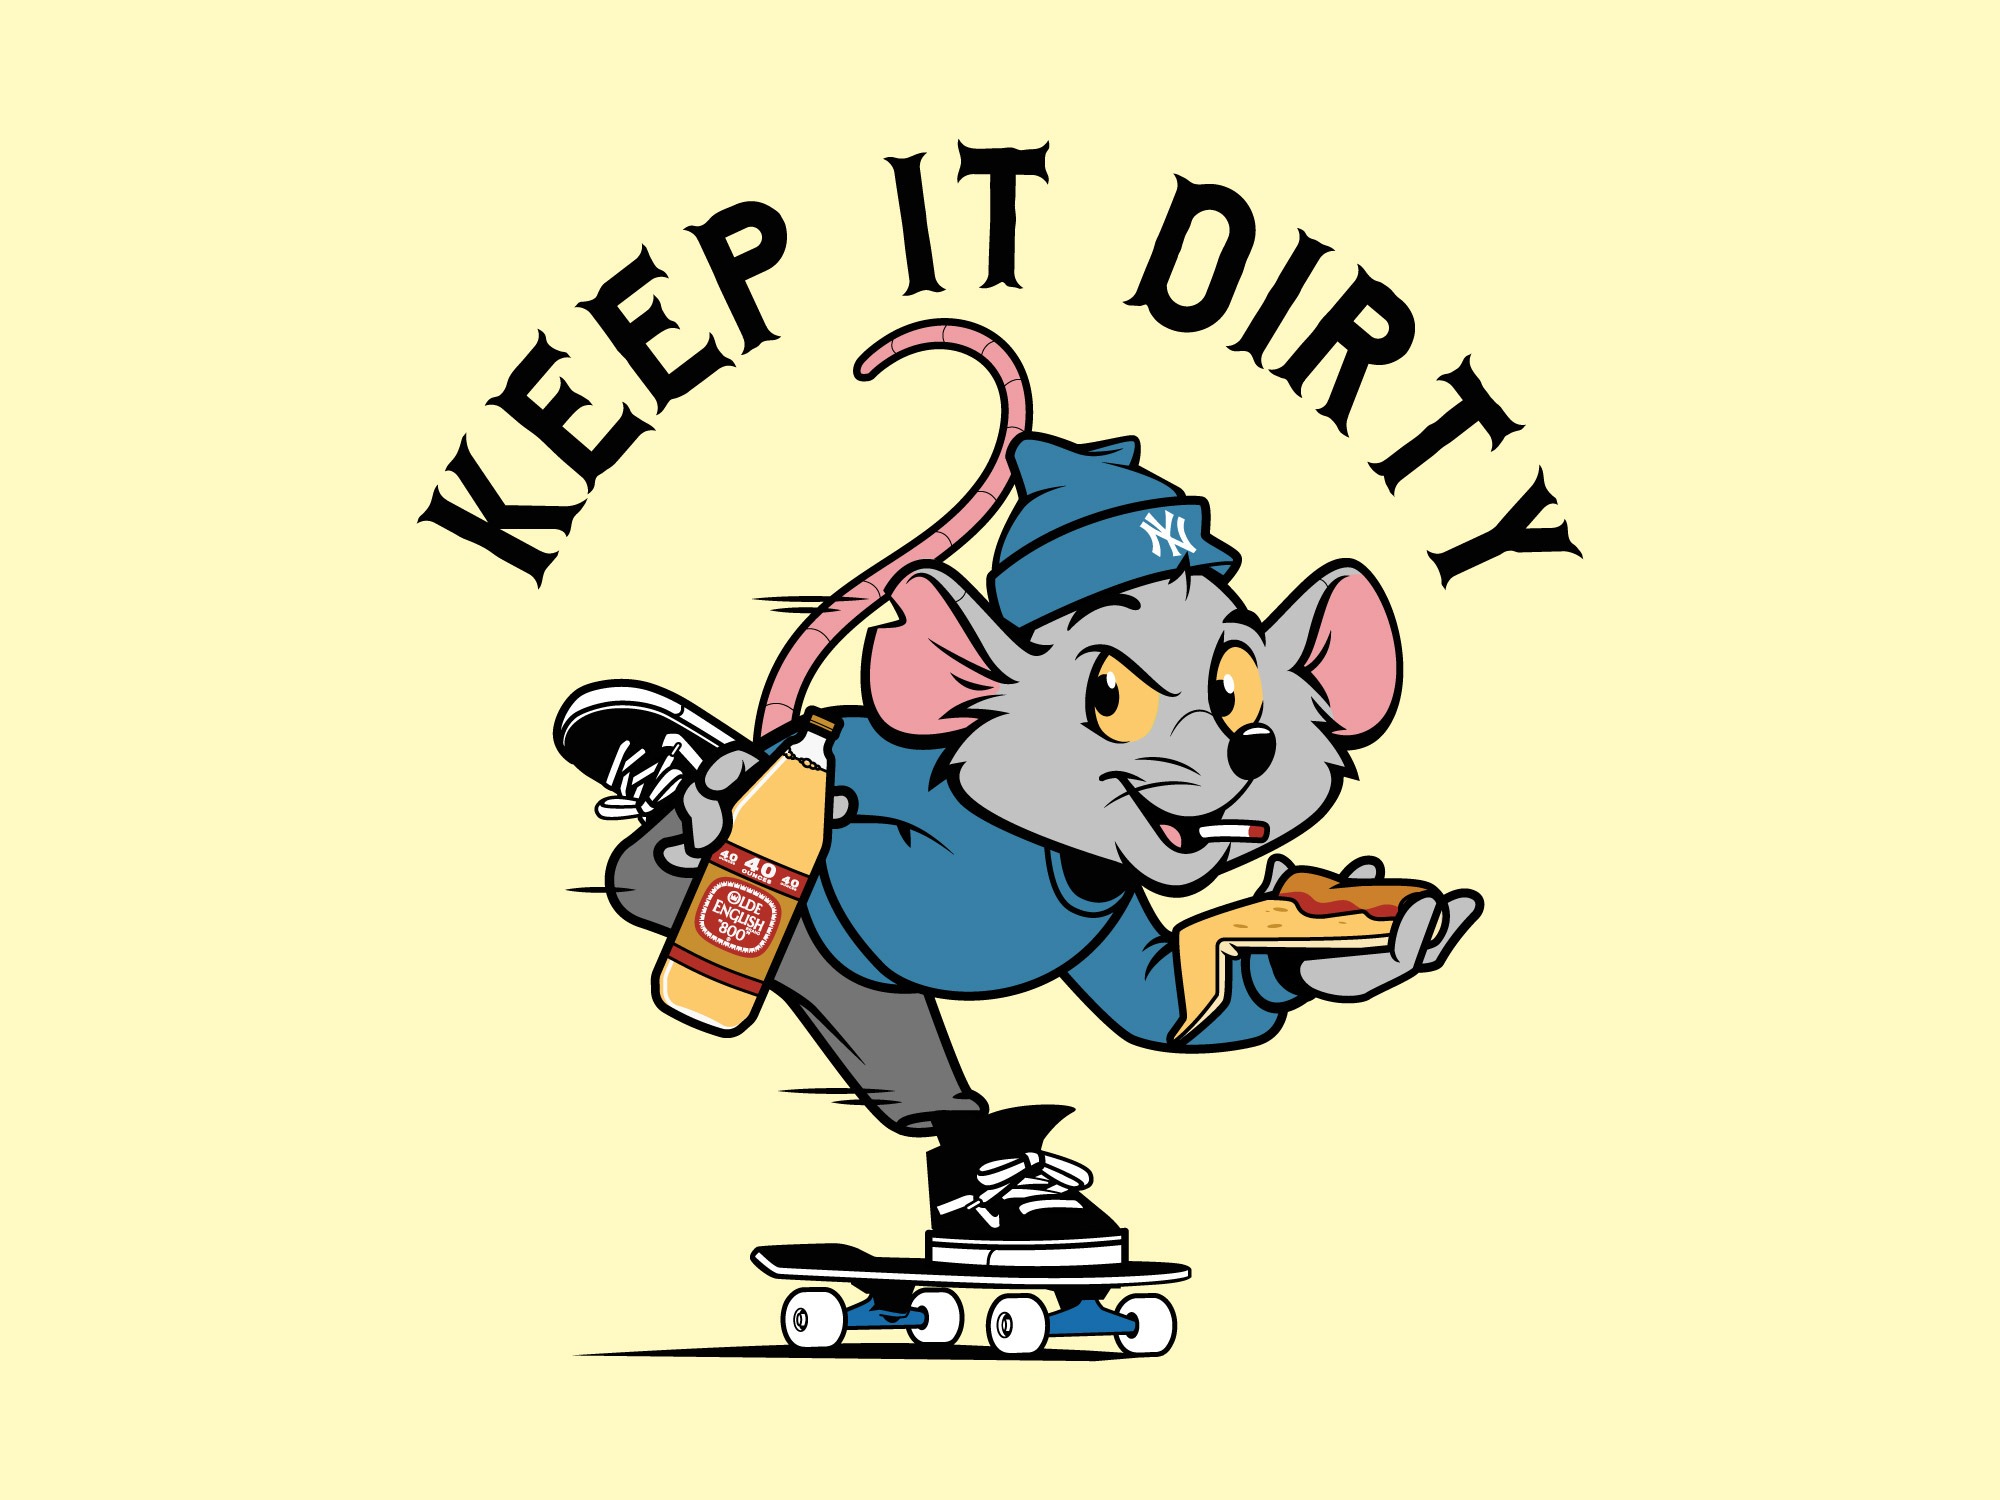 Keep it dirty